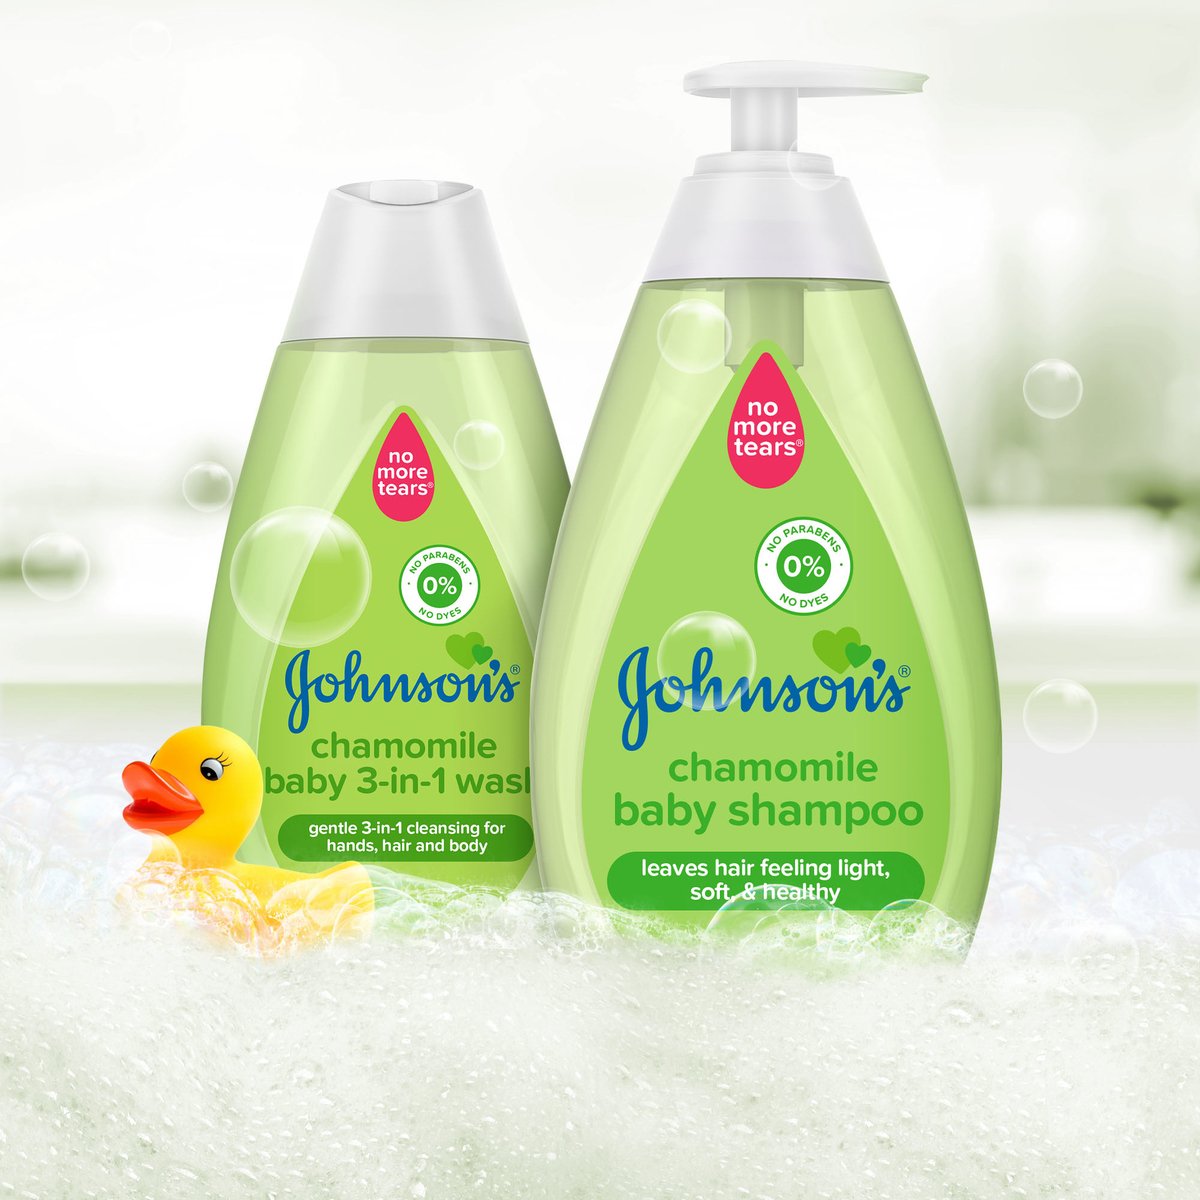 Johnson's Shampoo Chamomile Baby Shampoo 500ml